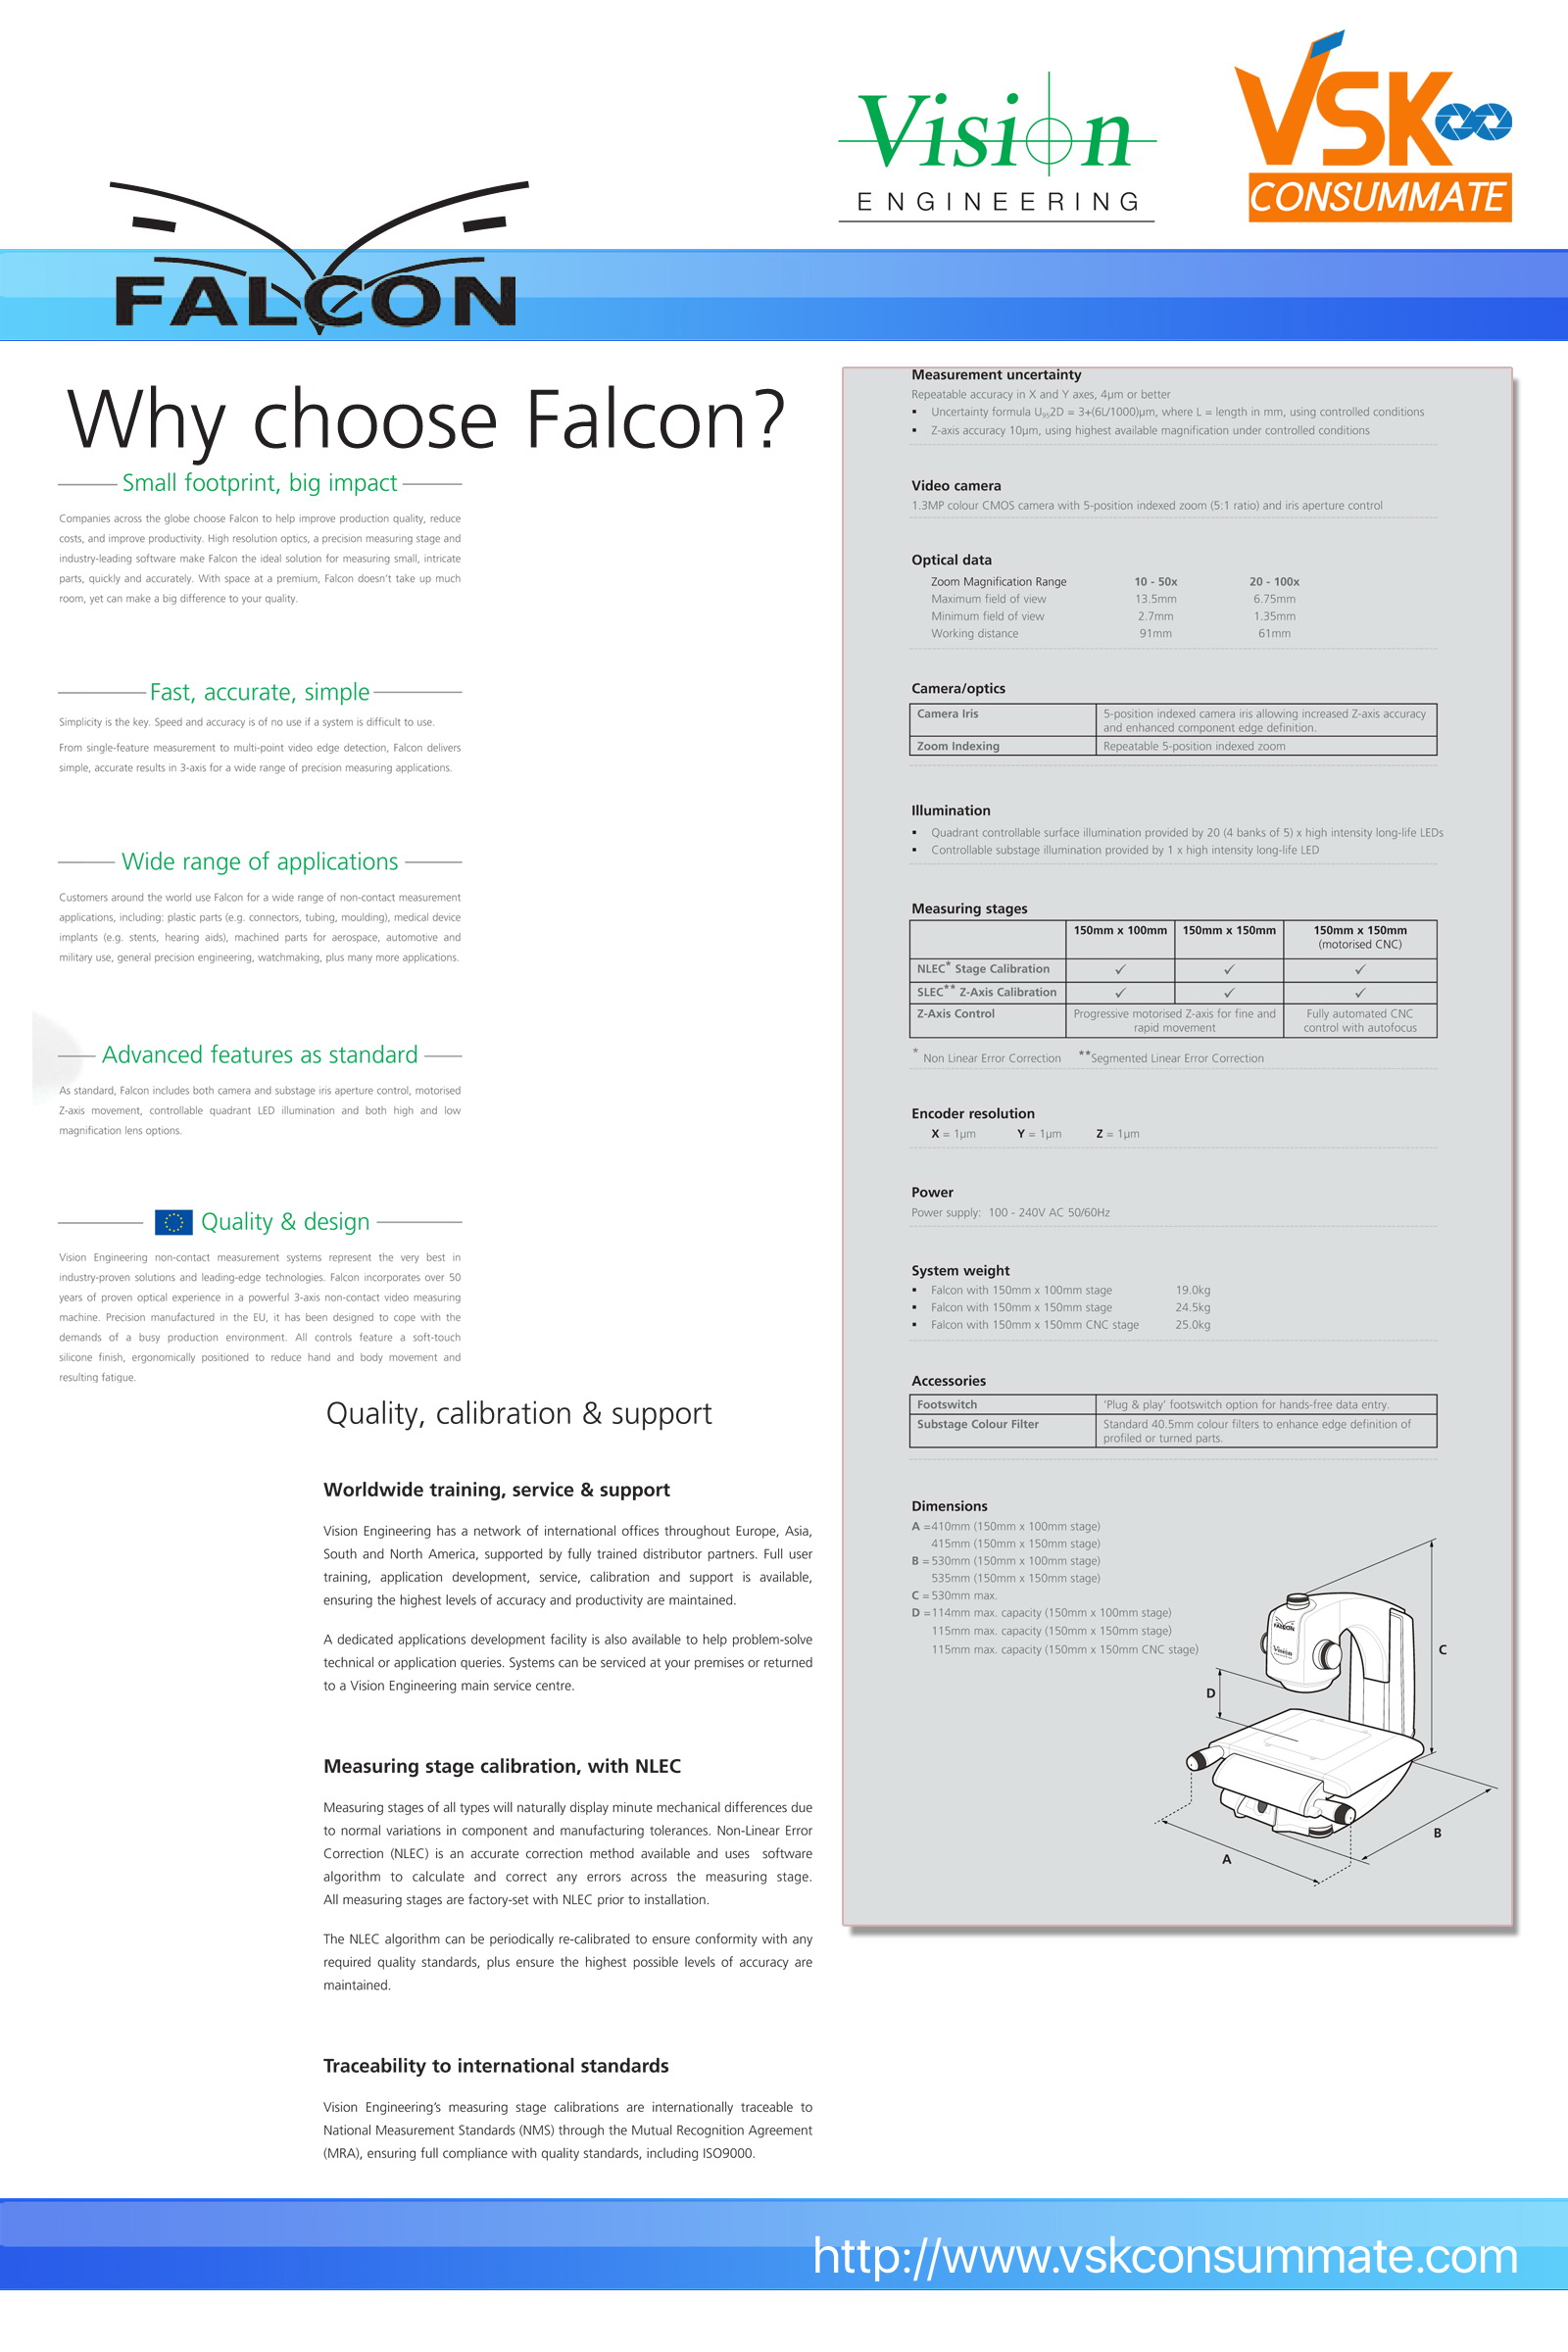 Falcon spec4.jpg (570 KB)